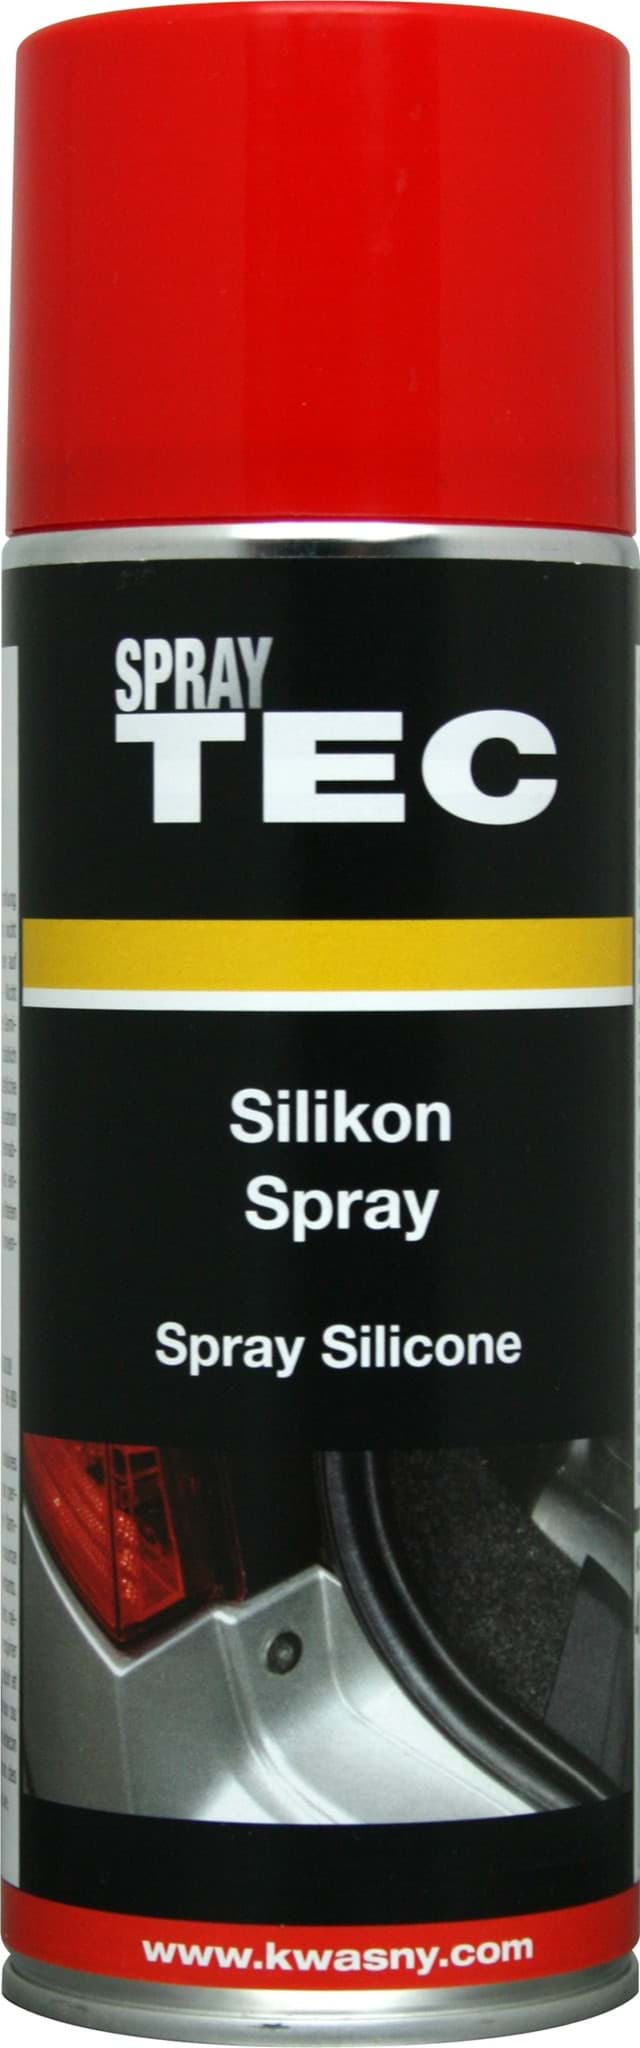 Afbeelding van Silikon-Spray 400ml SprayTEC 235001